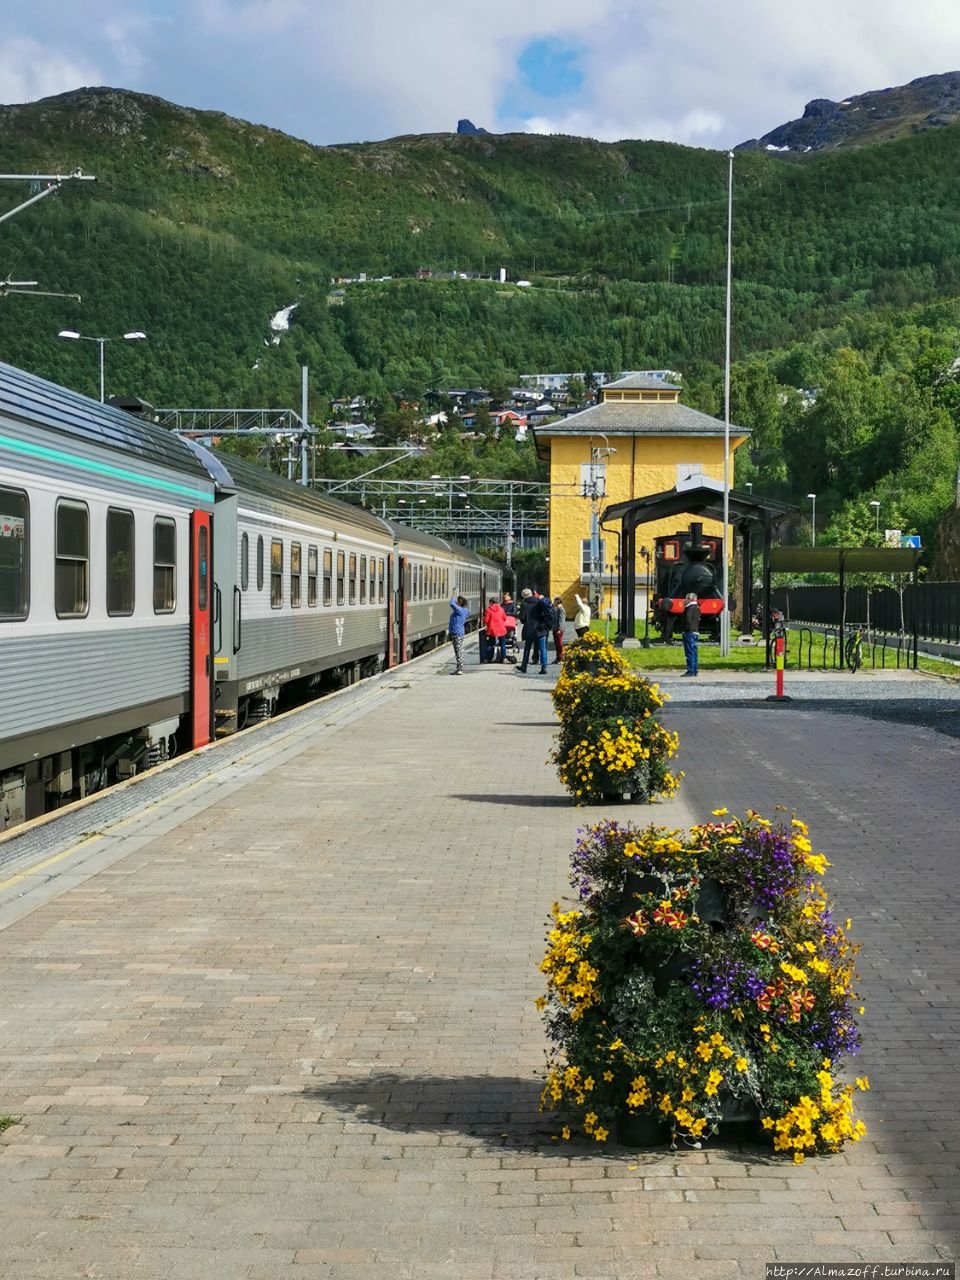 Нарвик — крайняя точка железнодорожной линии Мальмбанан Нарвик, Норвегия